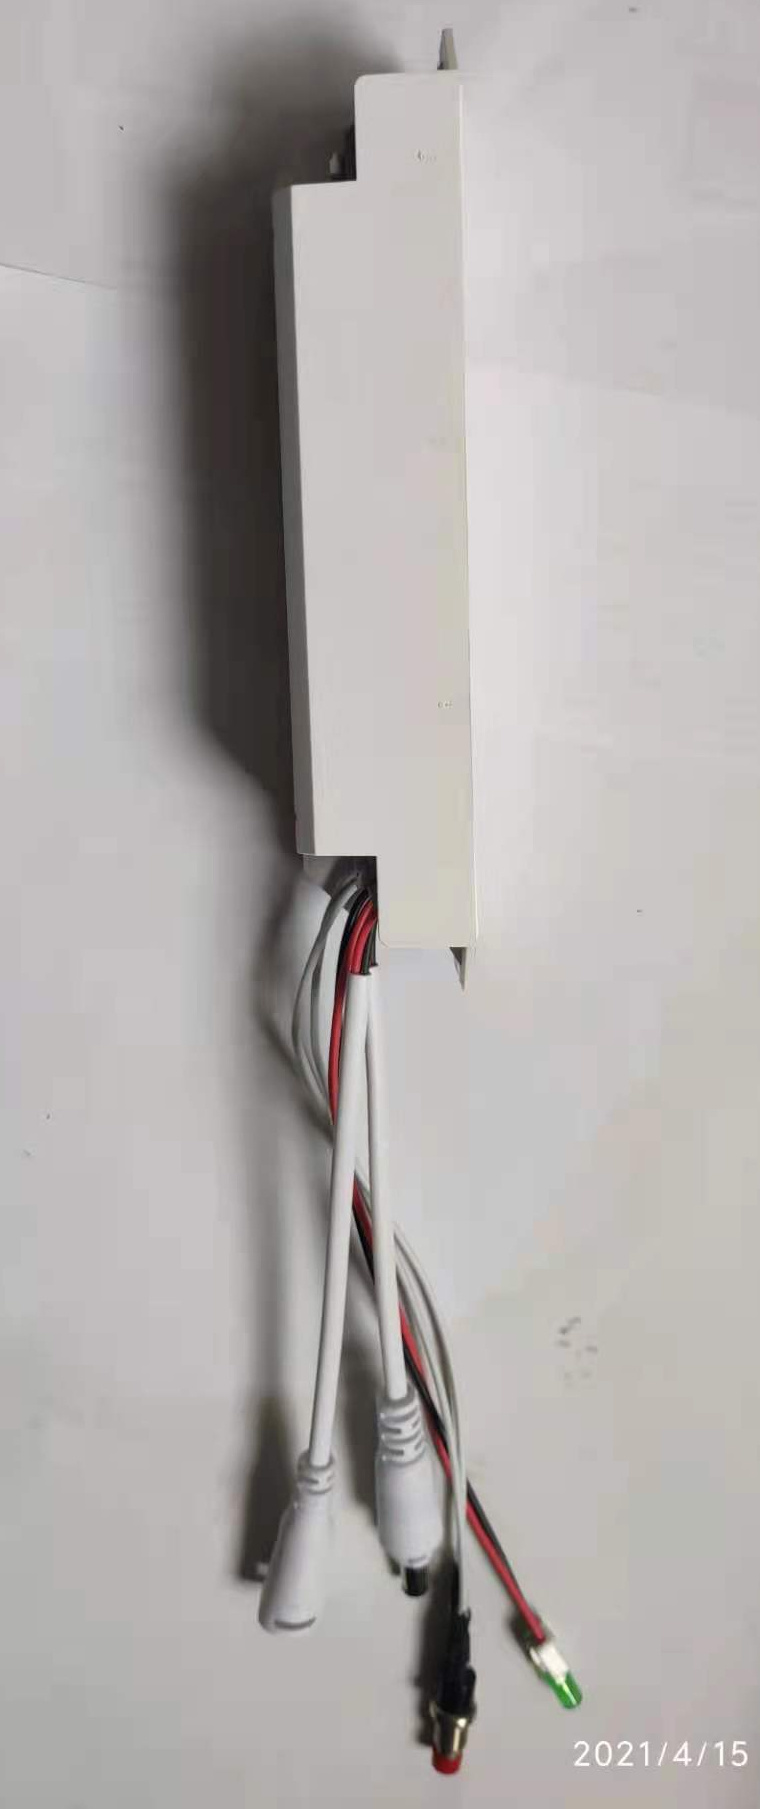 Kit Batería Driver Emergencia para Lámparas LED 5-50 W Interior